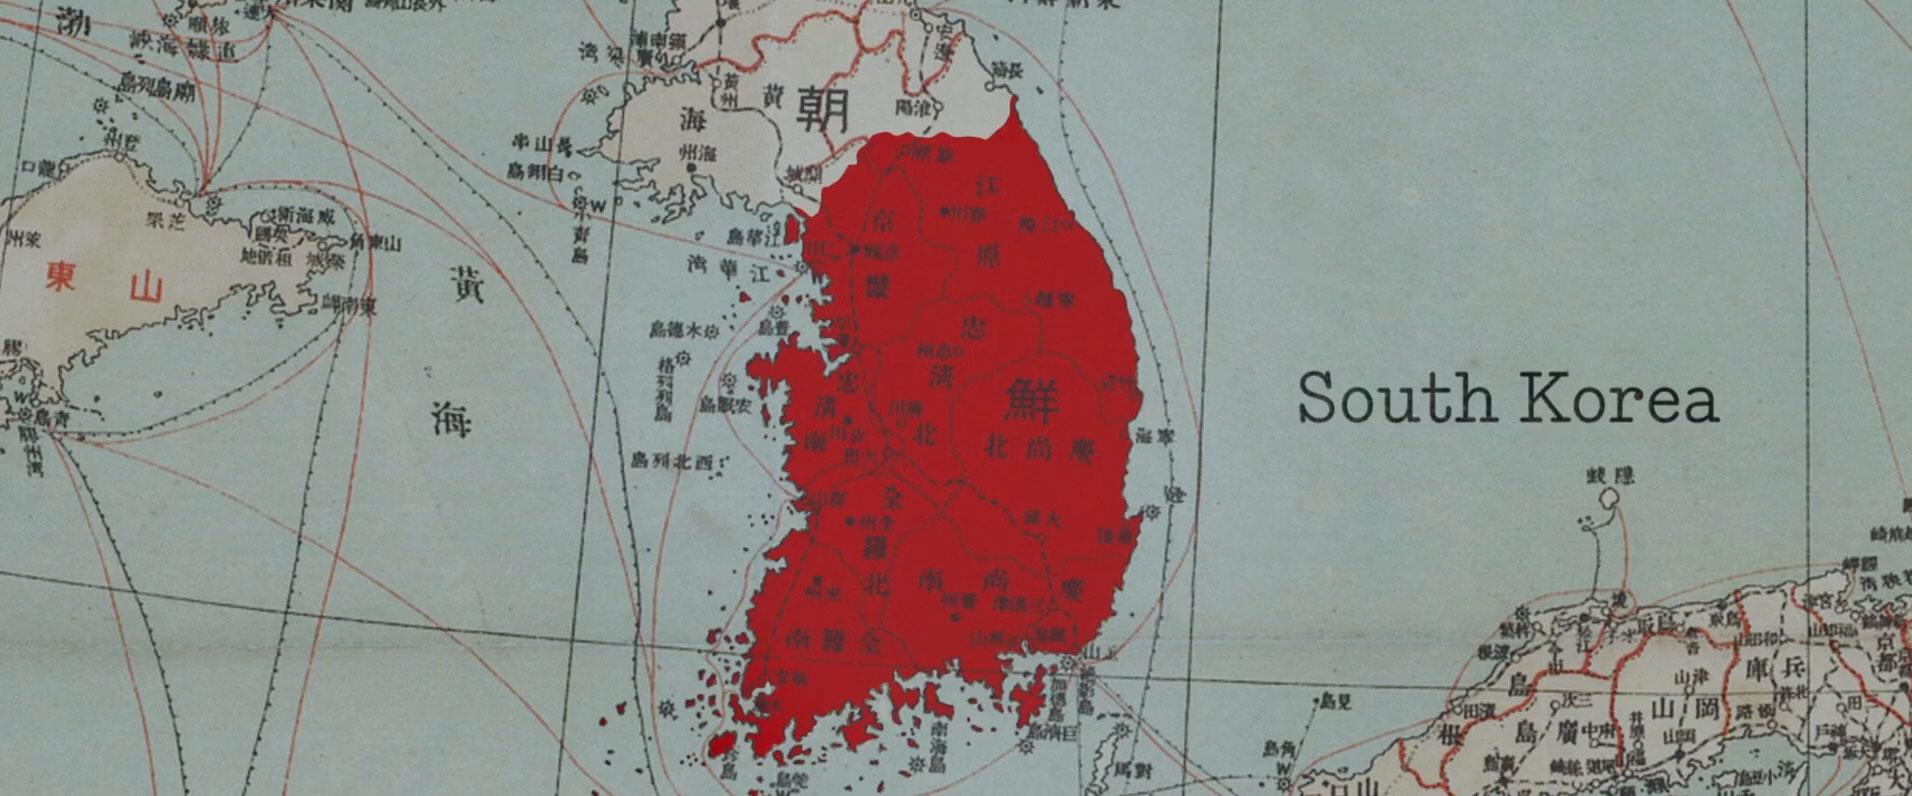 TSIAAS South Korea Map